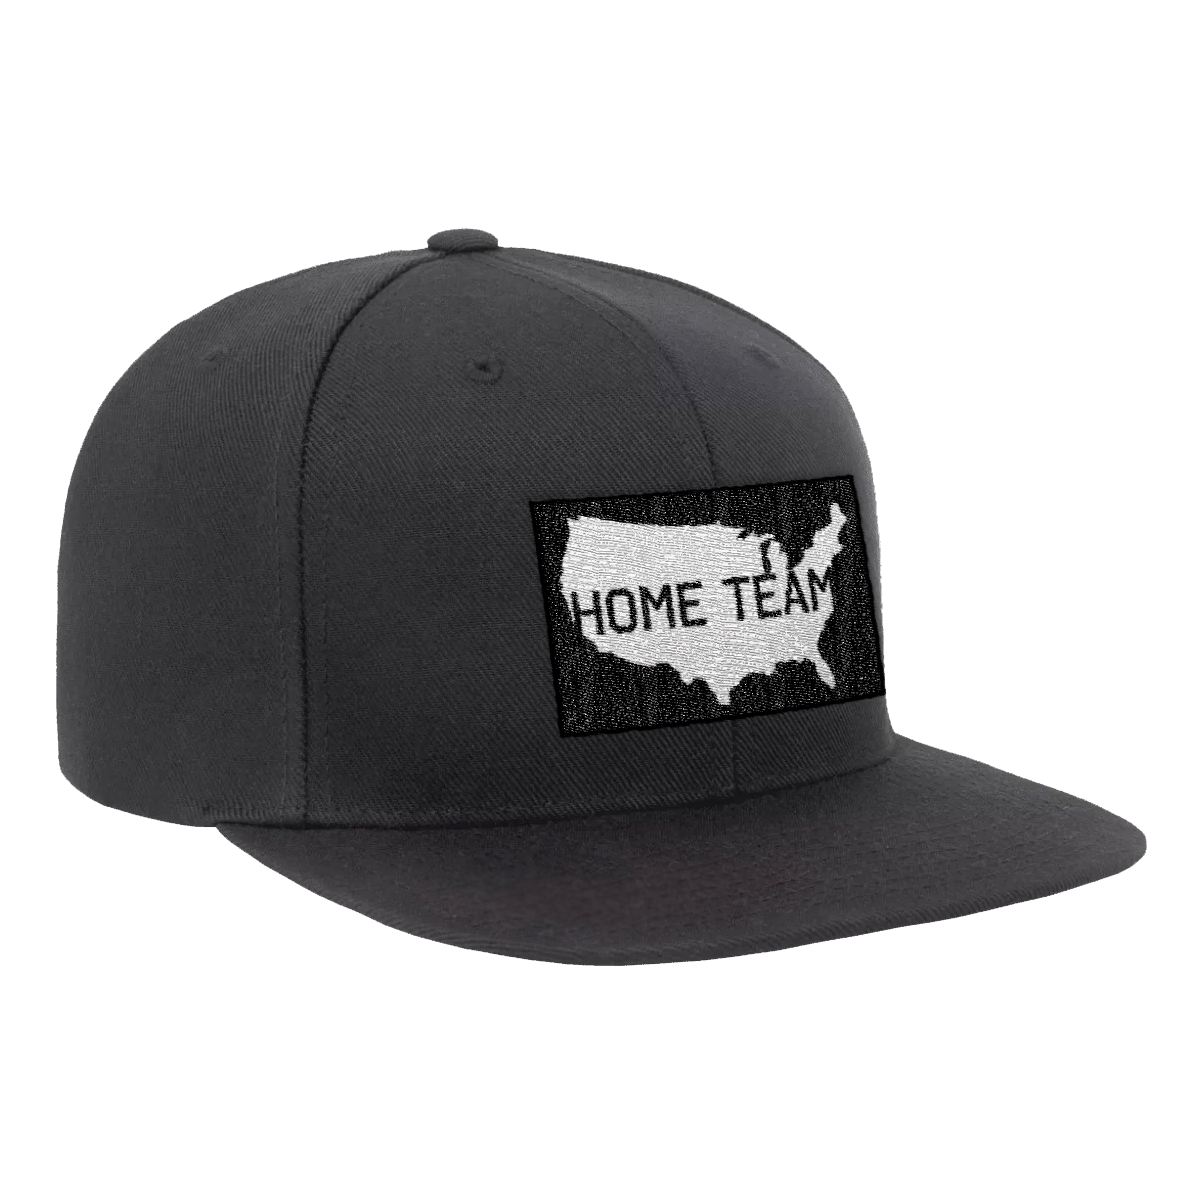 The “Original” Home Team Hat-Thomas Rhett